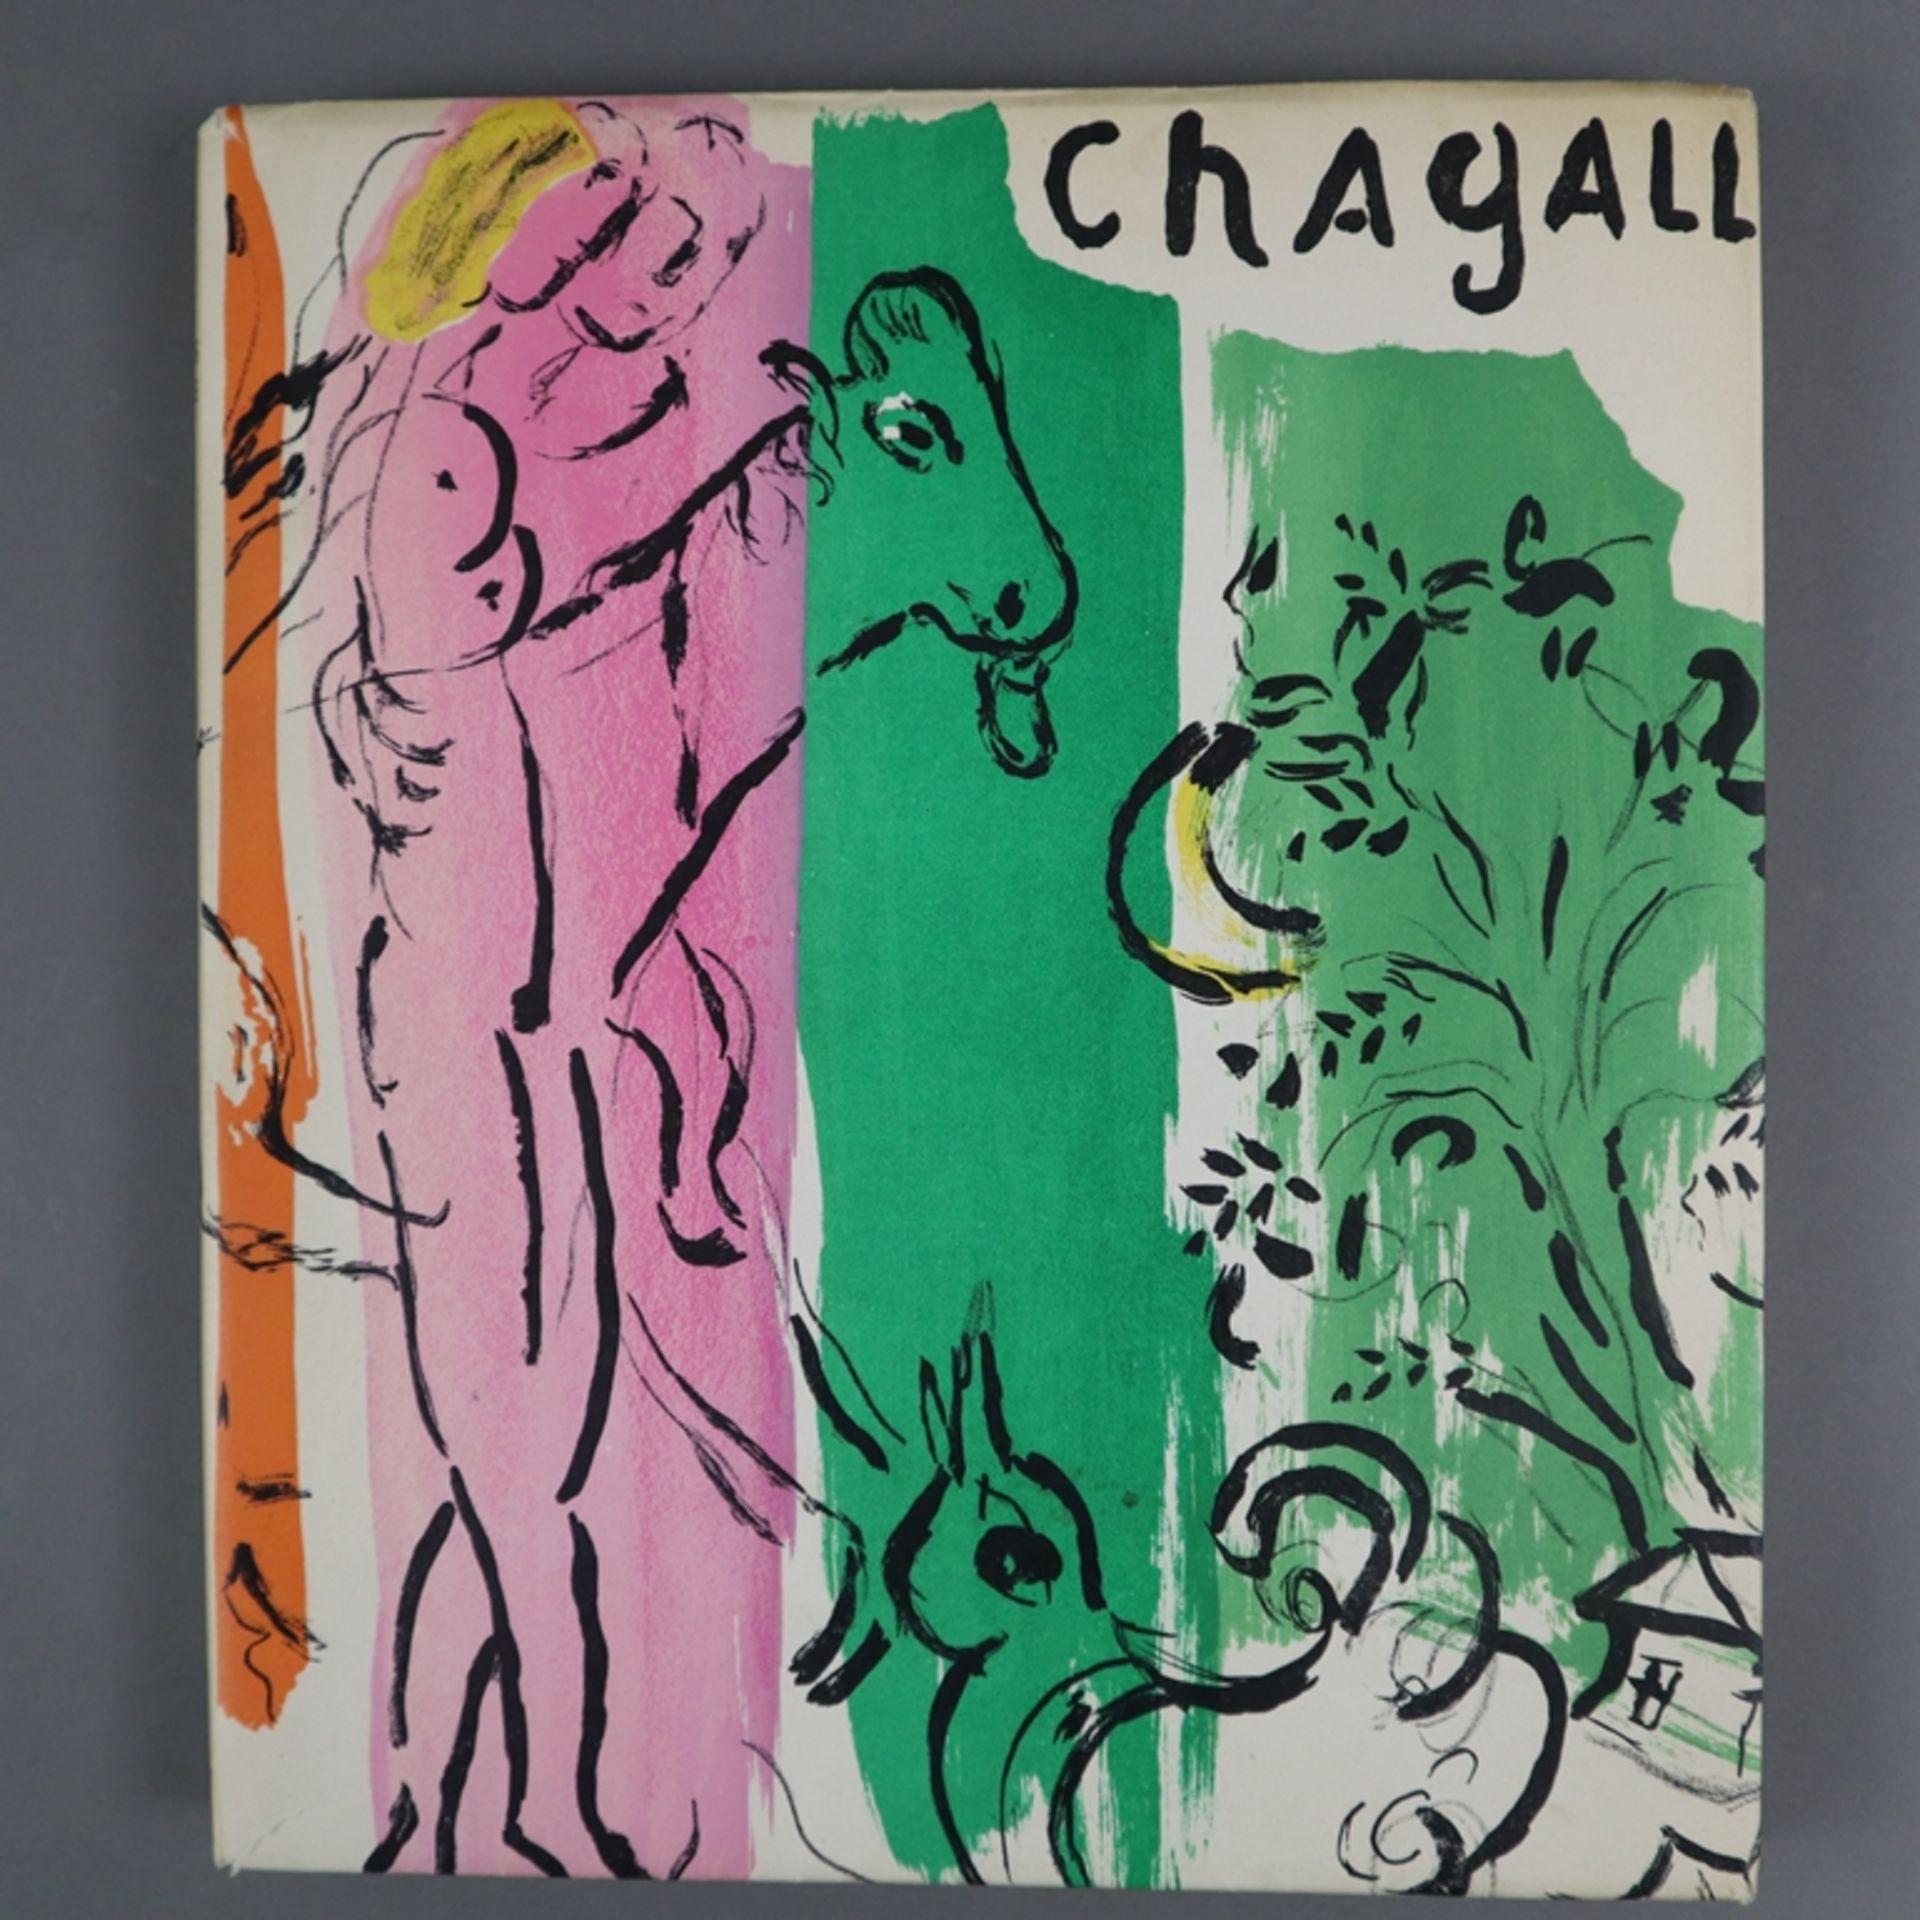 Marc Chagall / Jacques Lassaigne - "Chagall", Paris, Maeght 1957, mit 15 Lithografien (inkl. Titel 